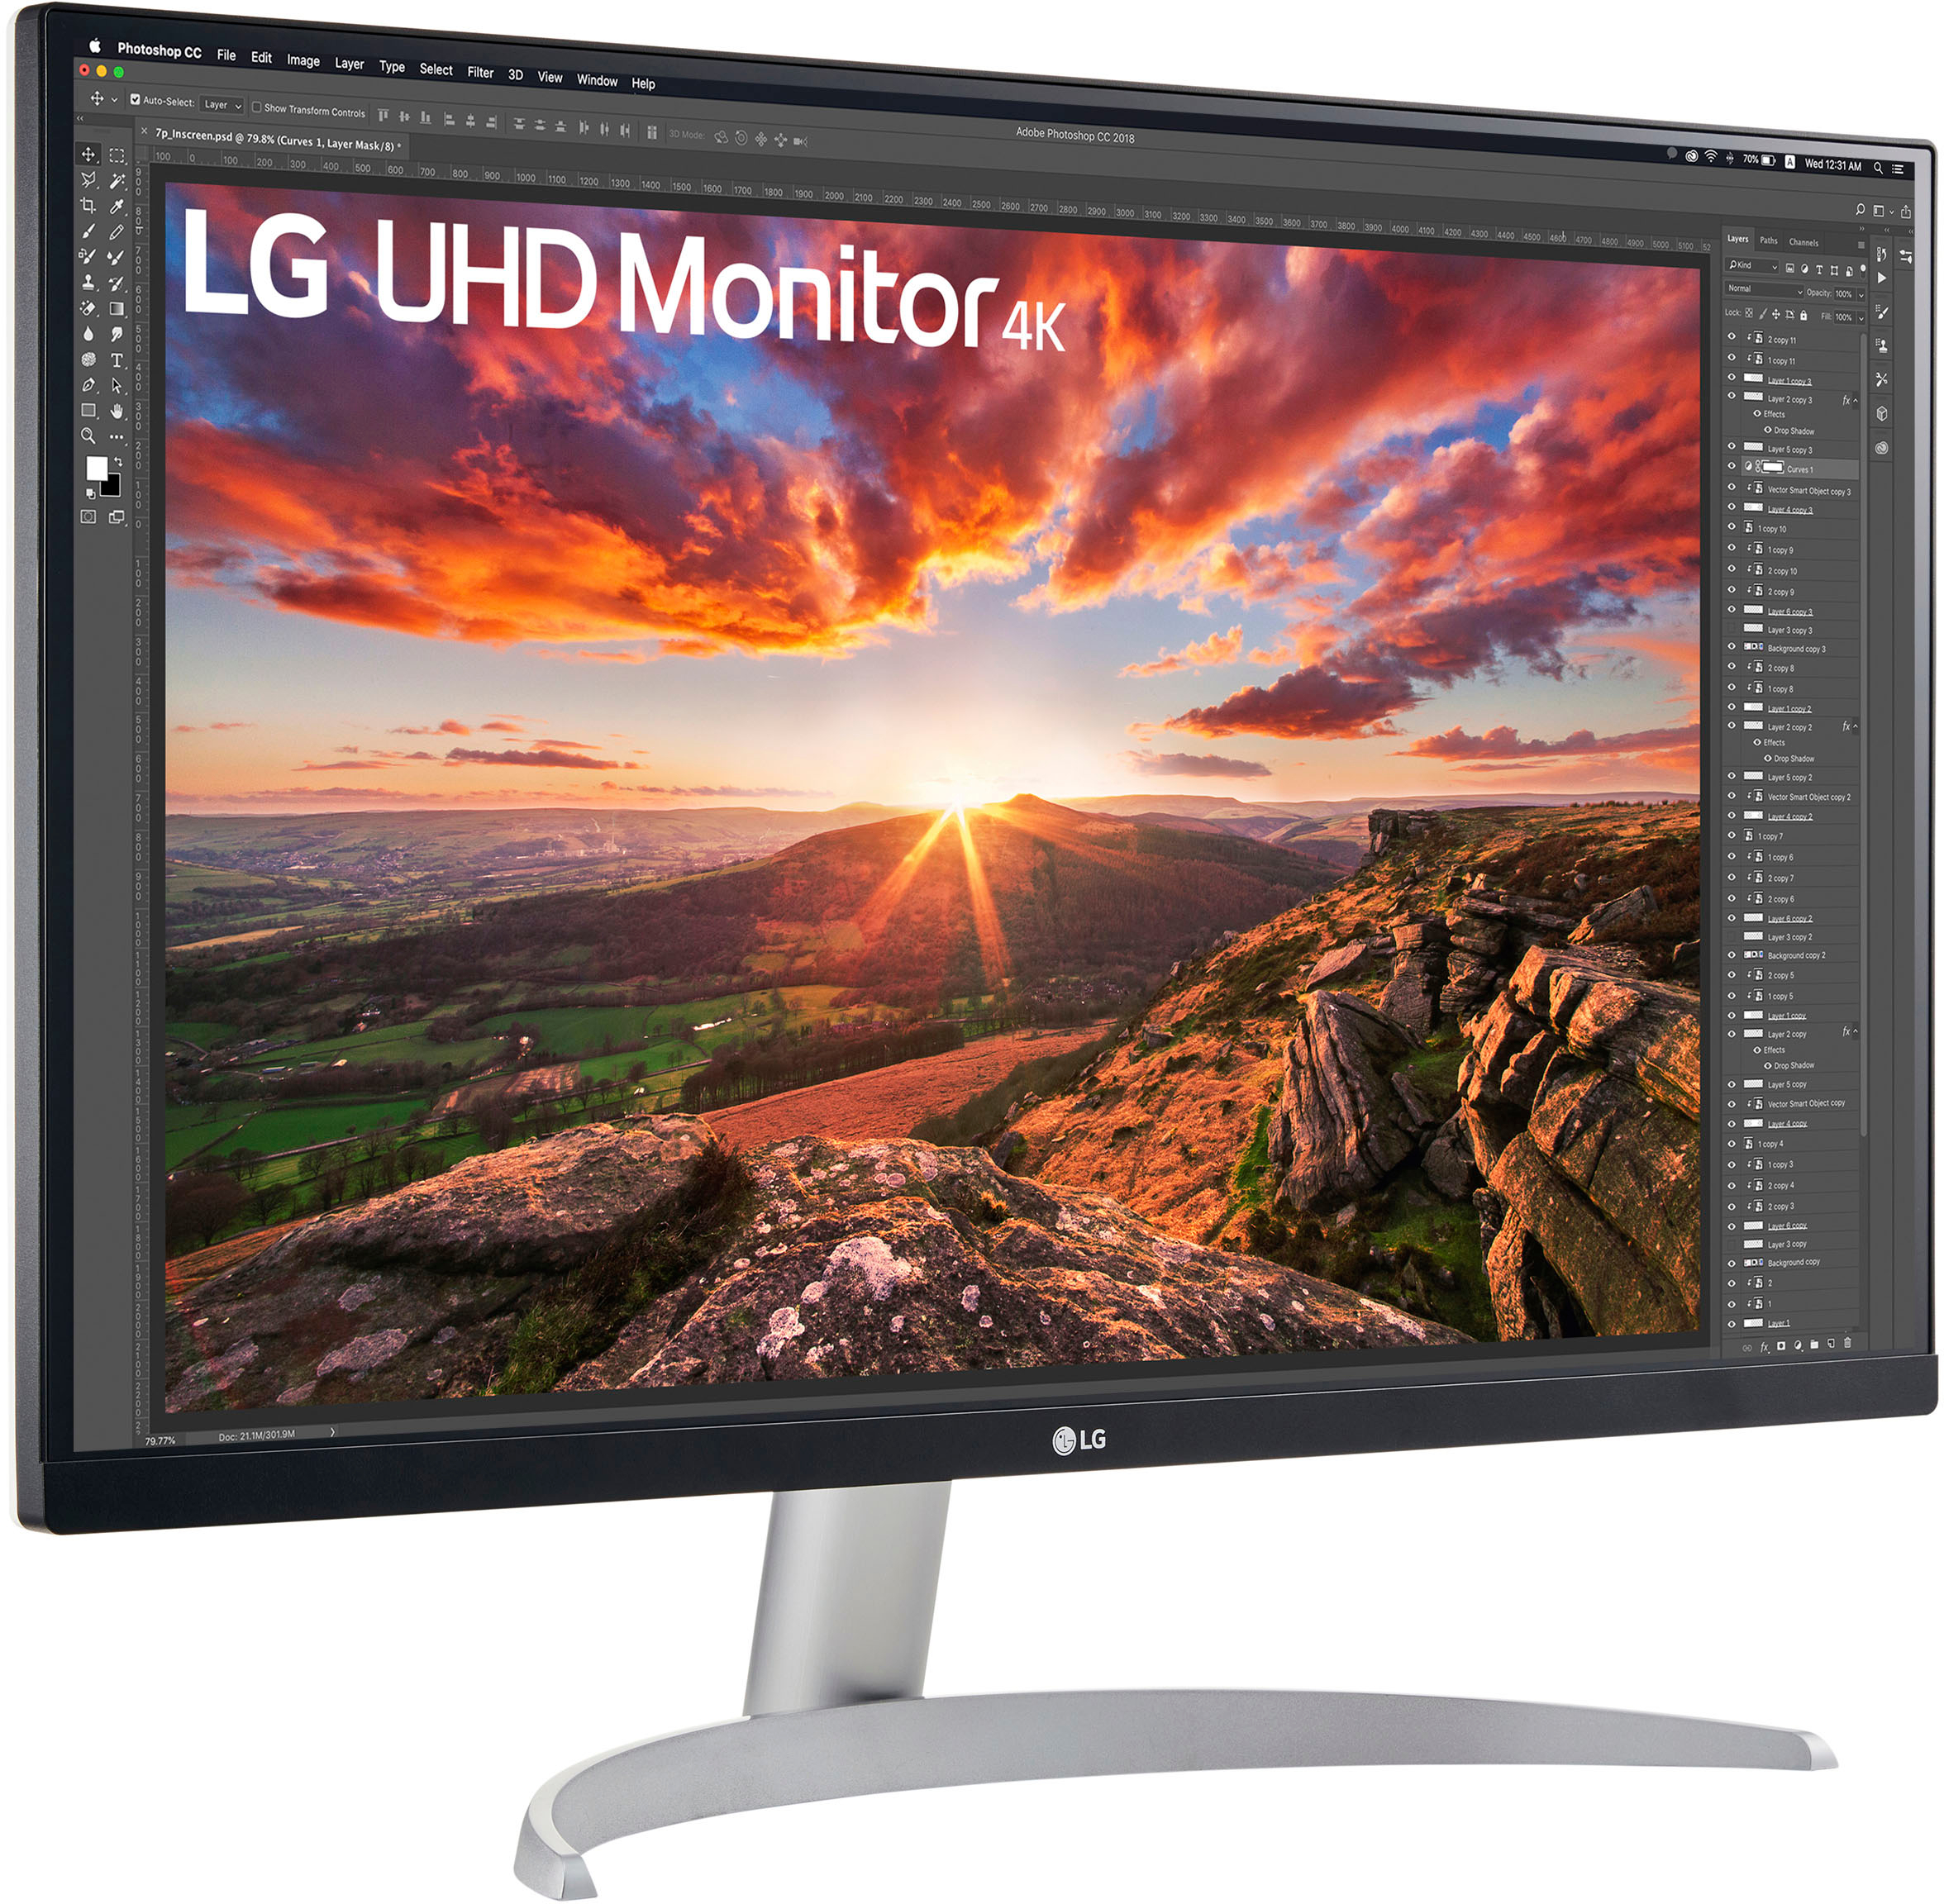 Angle View: LG - 27” IPS LED 4K UHD AMD FreeSync Monitor with HDR (DisplayPort, HDMI) - Black